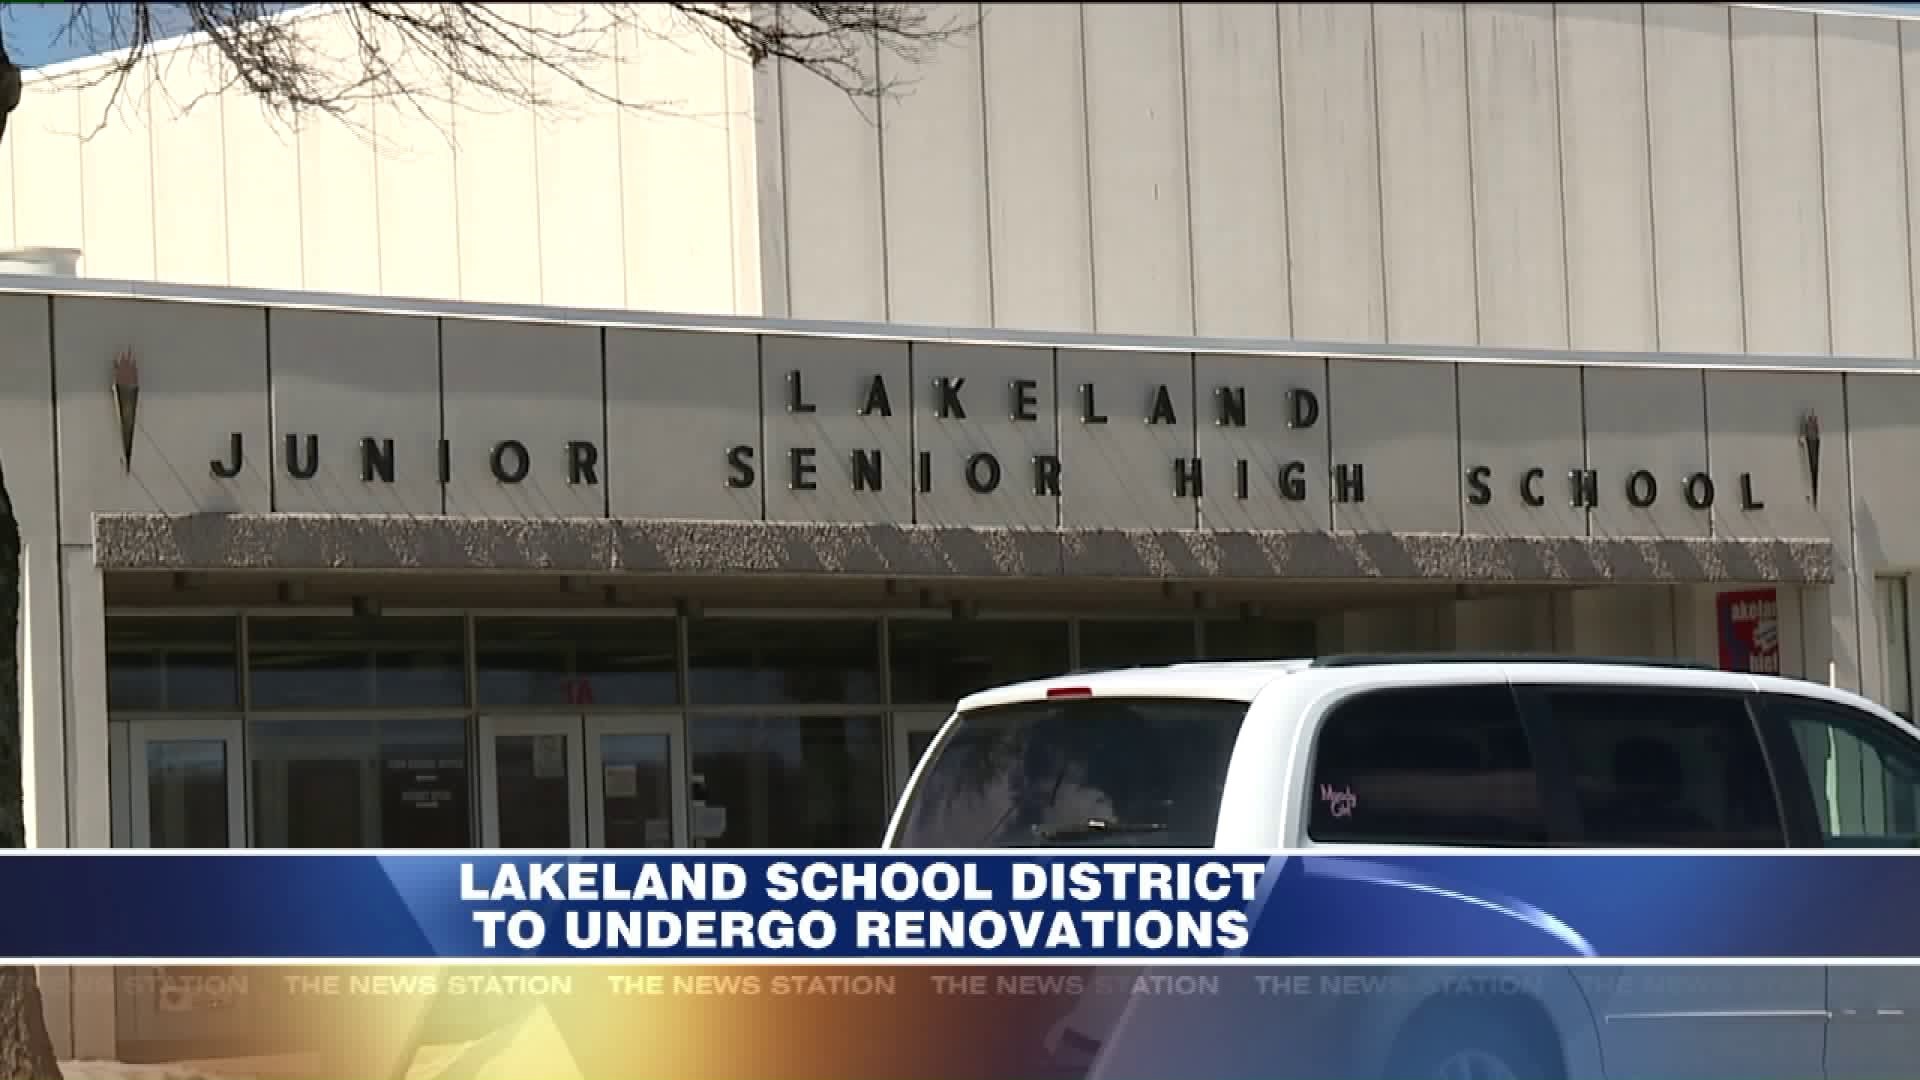 Lakeland School District to Undergo Renovations